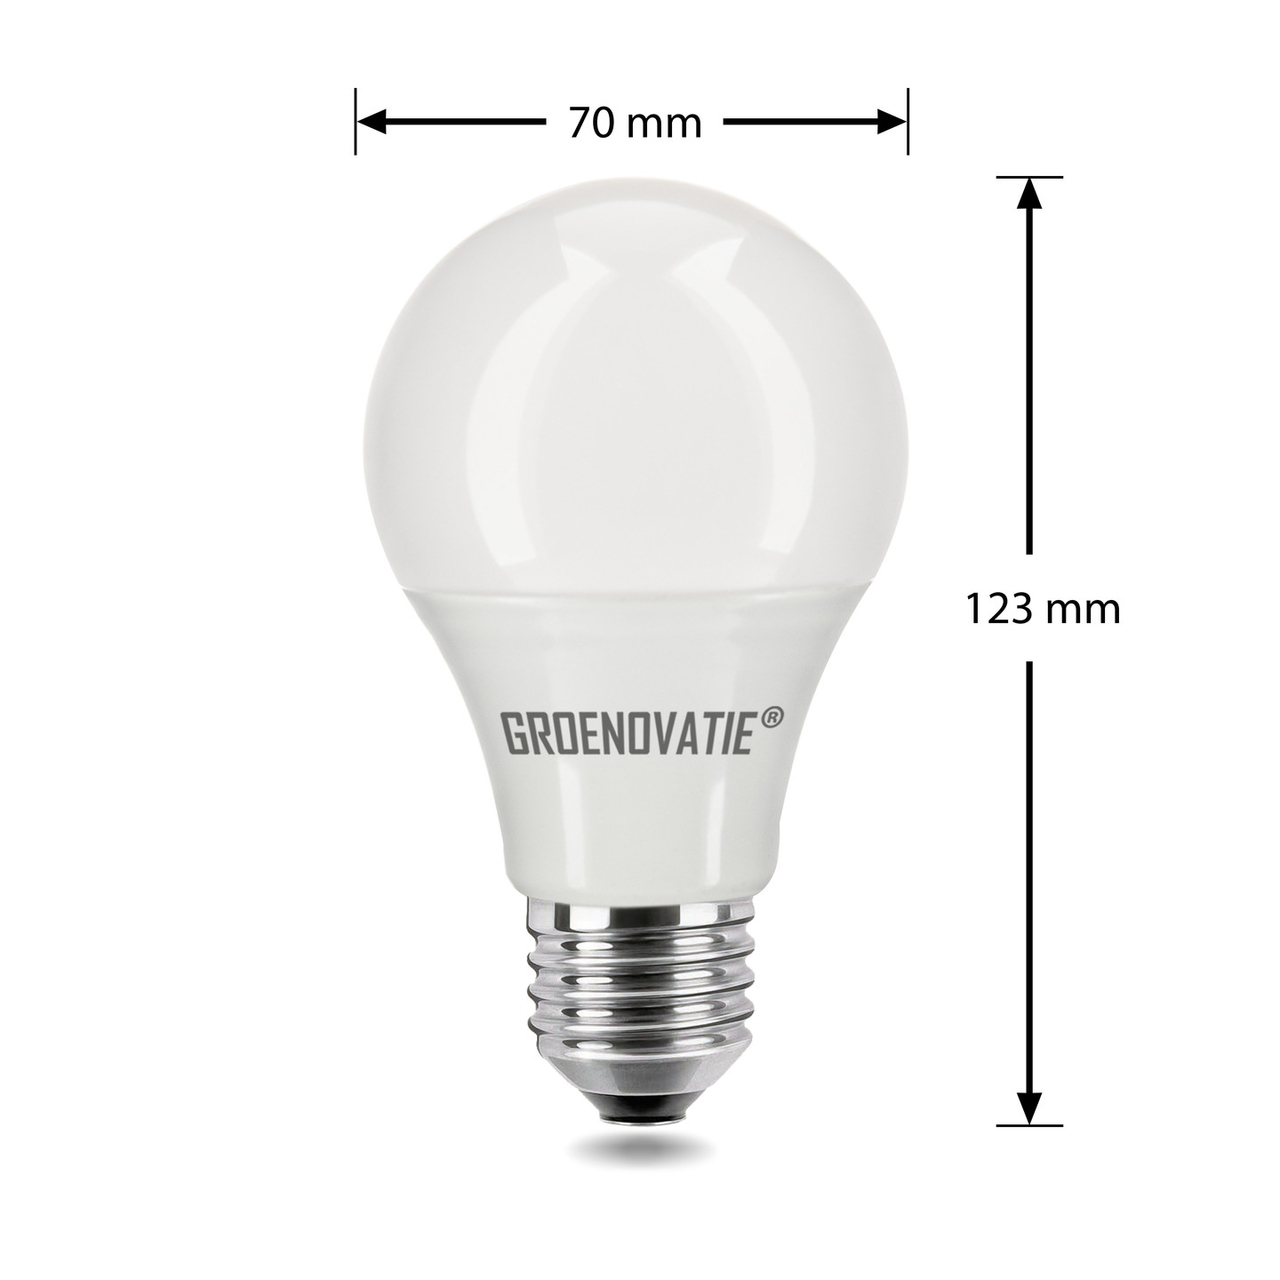 Ongrijpbaar overhead Wees tevreden E27 LED Lamp 9W Warm Wit - LEDlampen Action - Woonkamerlampen